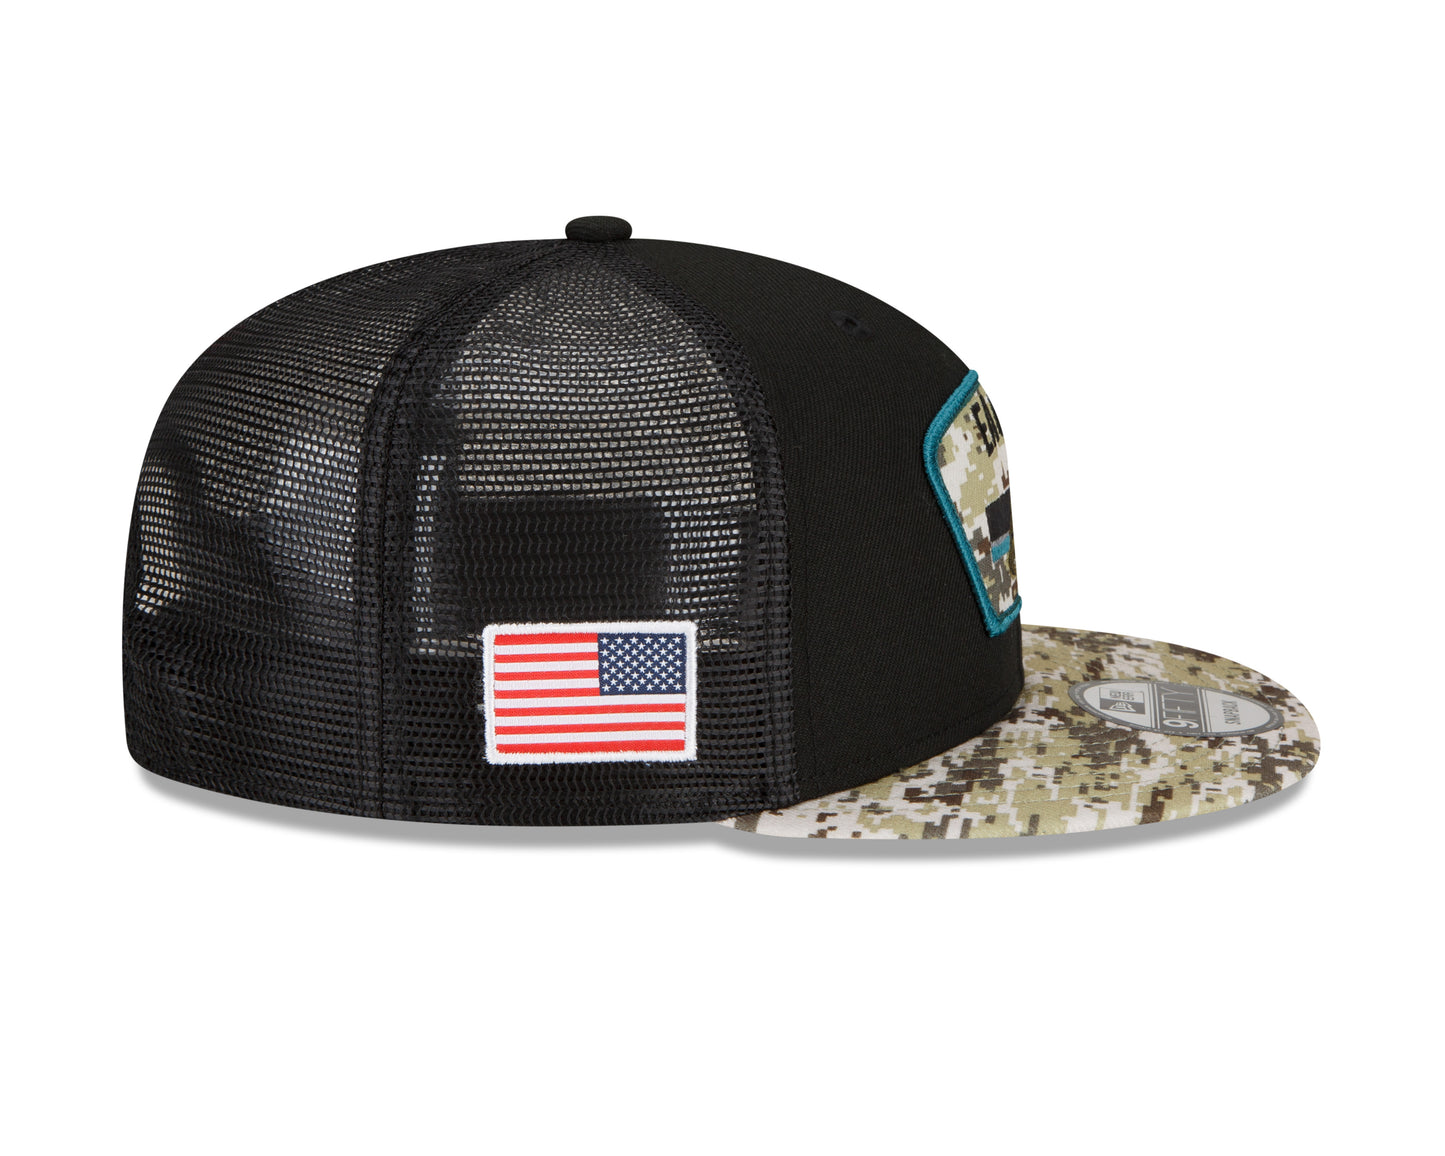 Philadelphia Eagles New Era Salute to Service Trucker 9Fifty Snapback hat